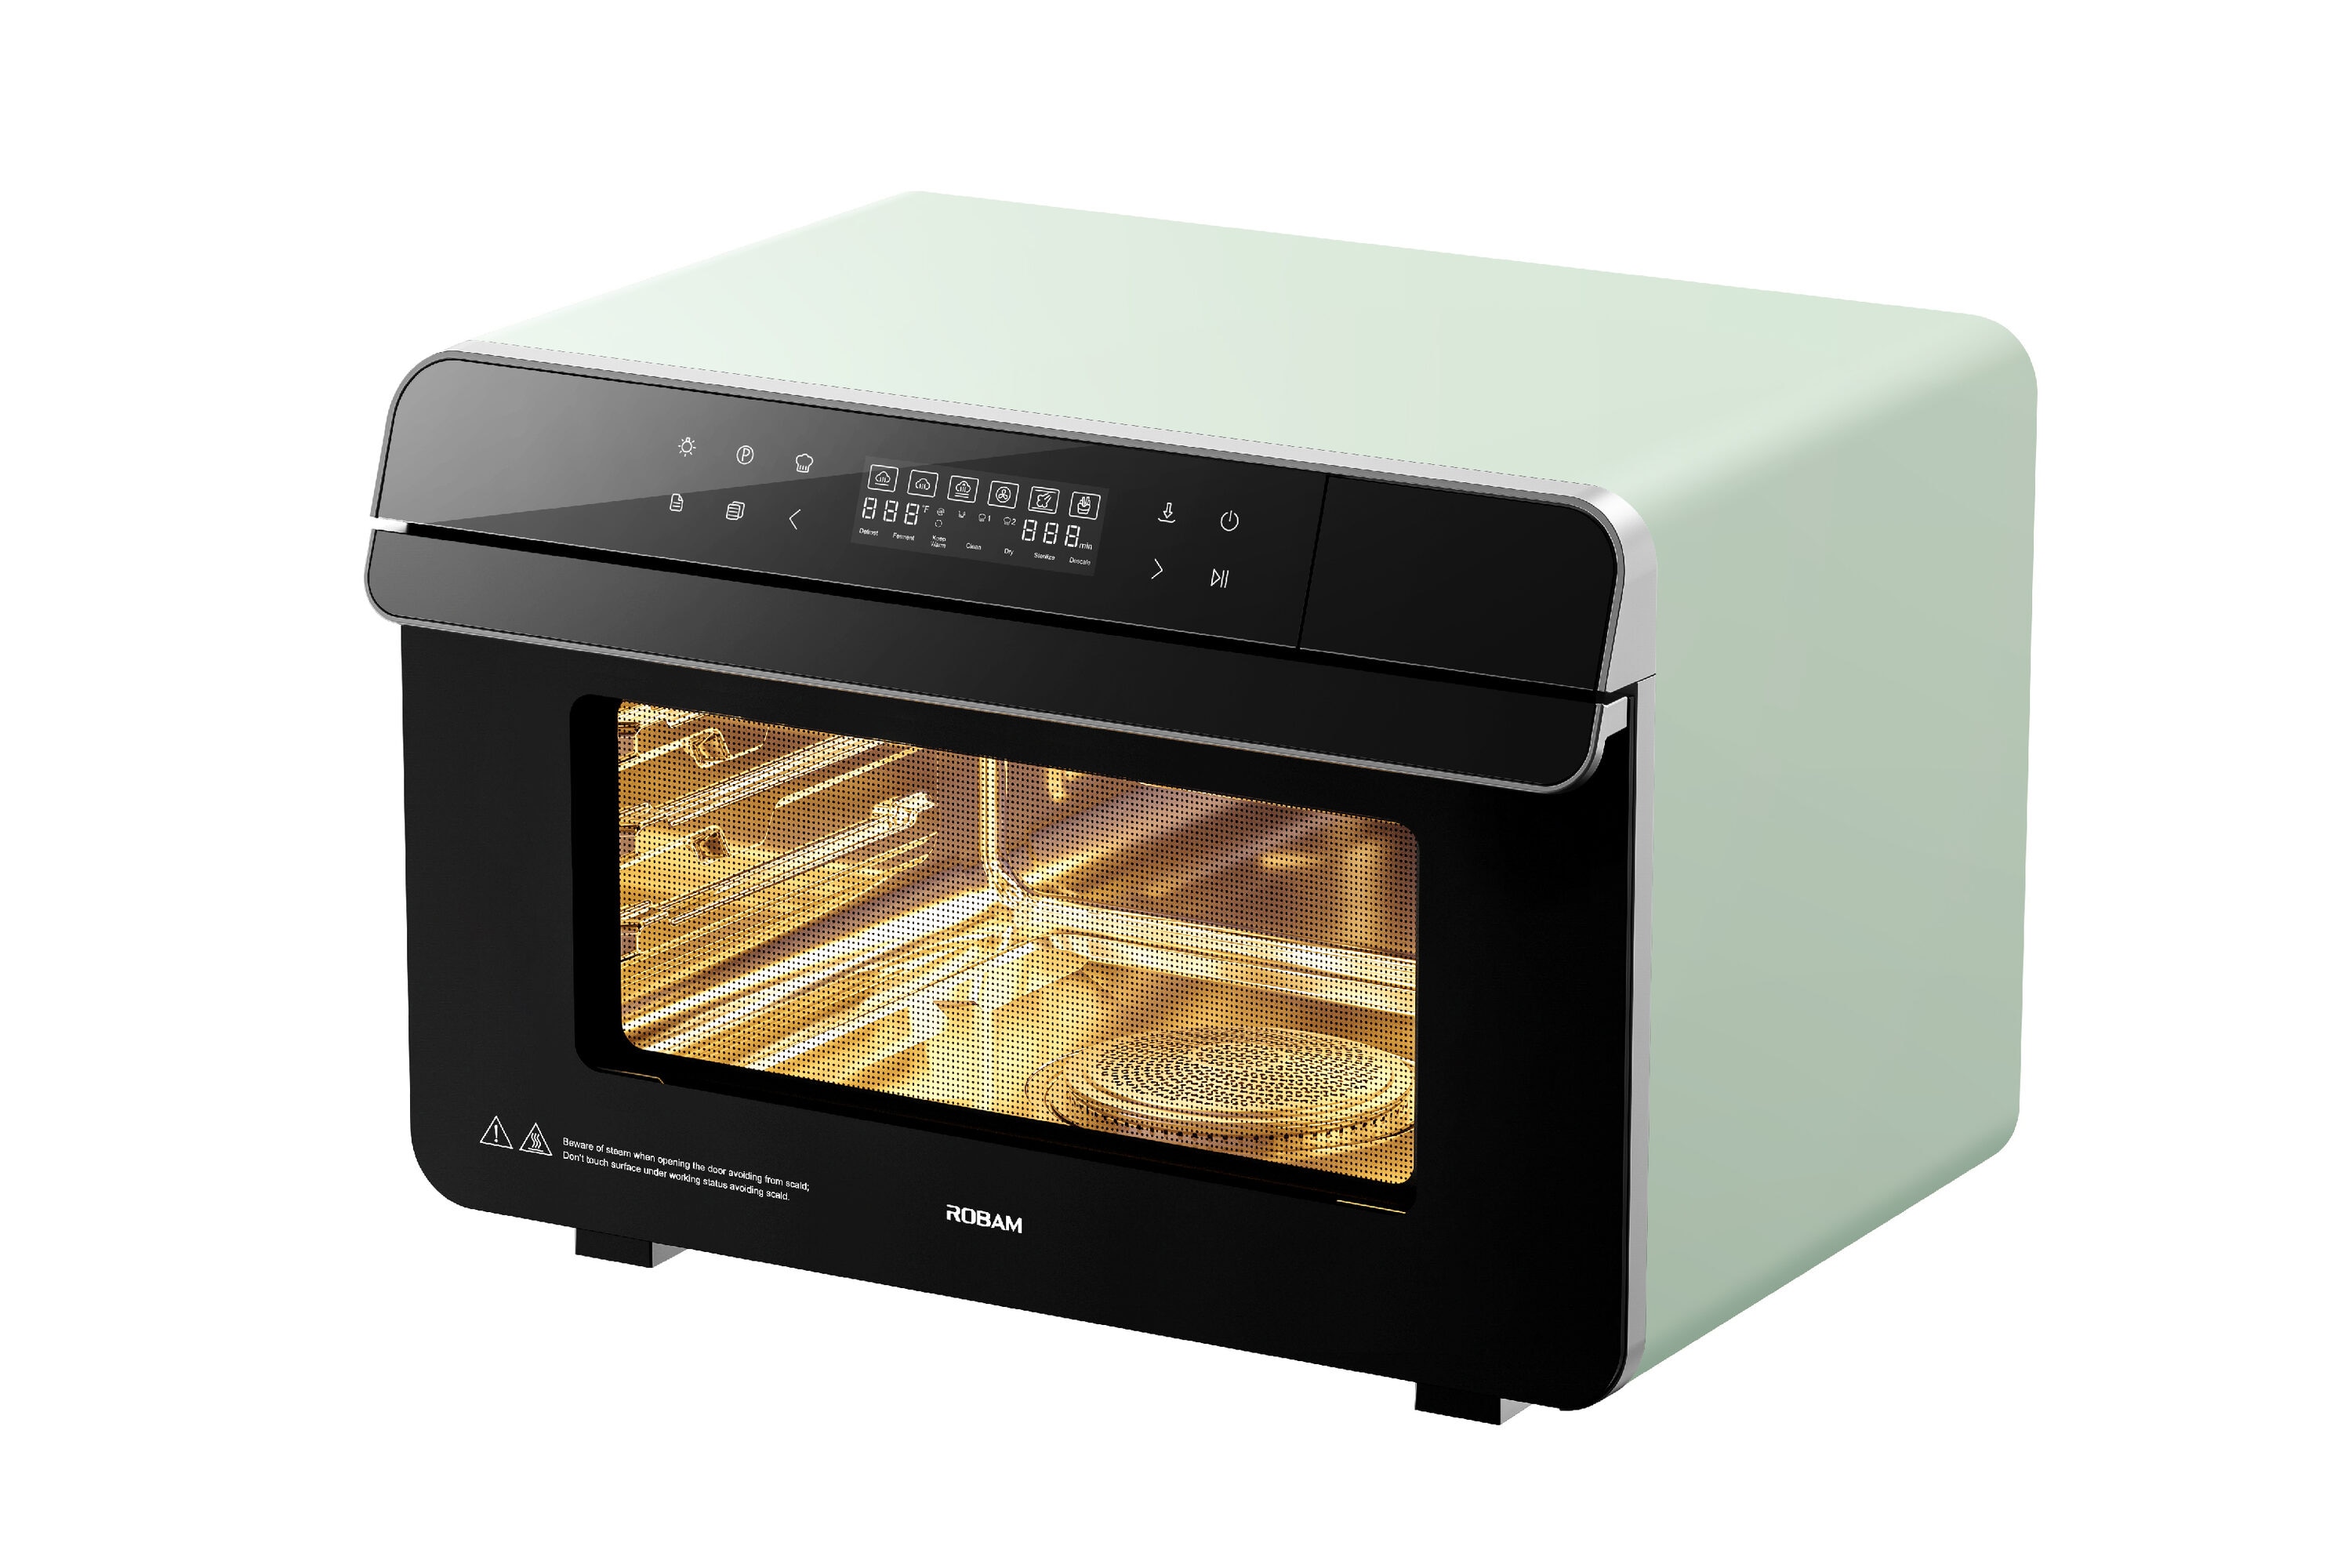 Chefman 18L Toaster Oven Air Fryer - AliExpress